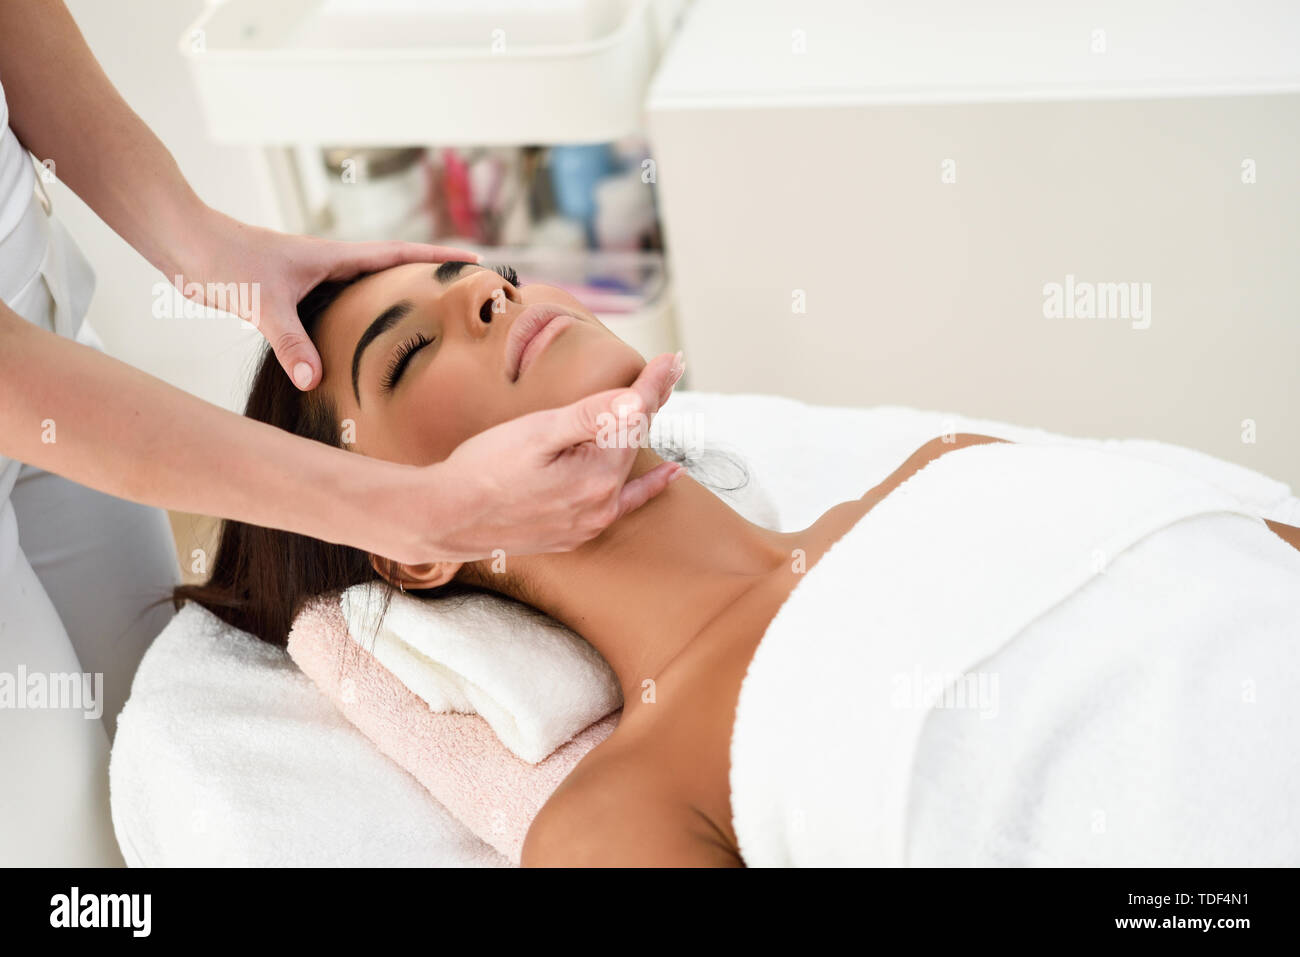 Woman receiving head massage in spa wellness center. Stock Photo